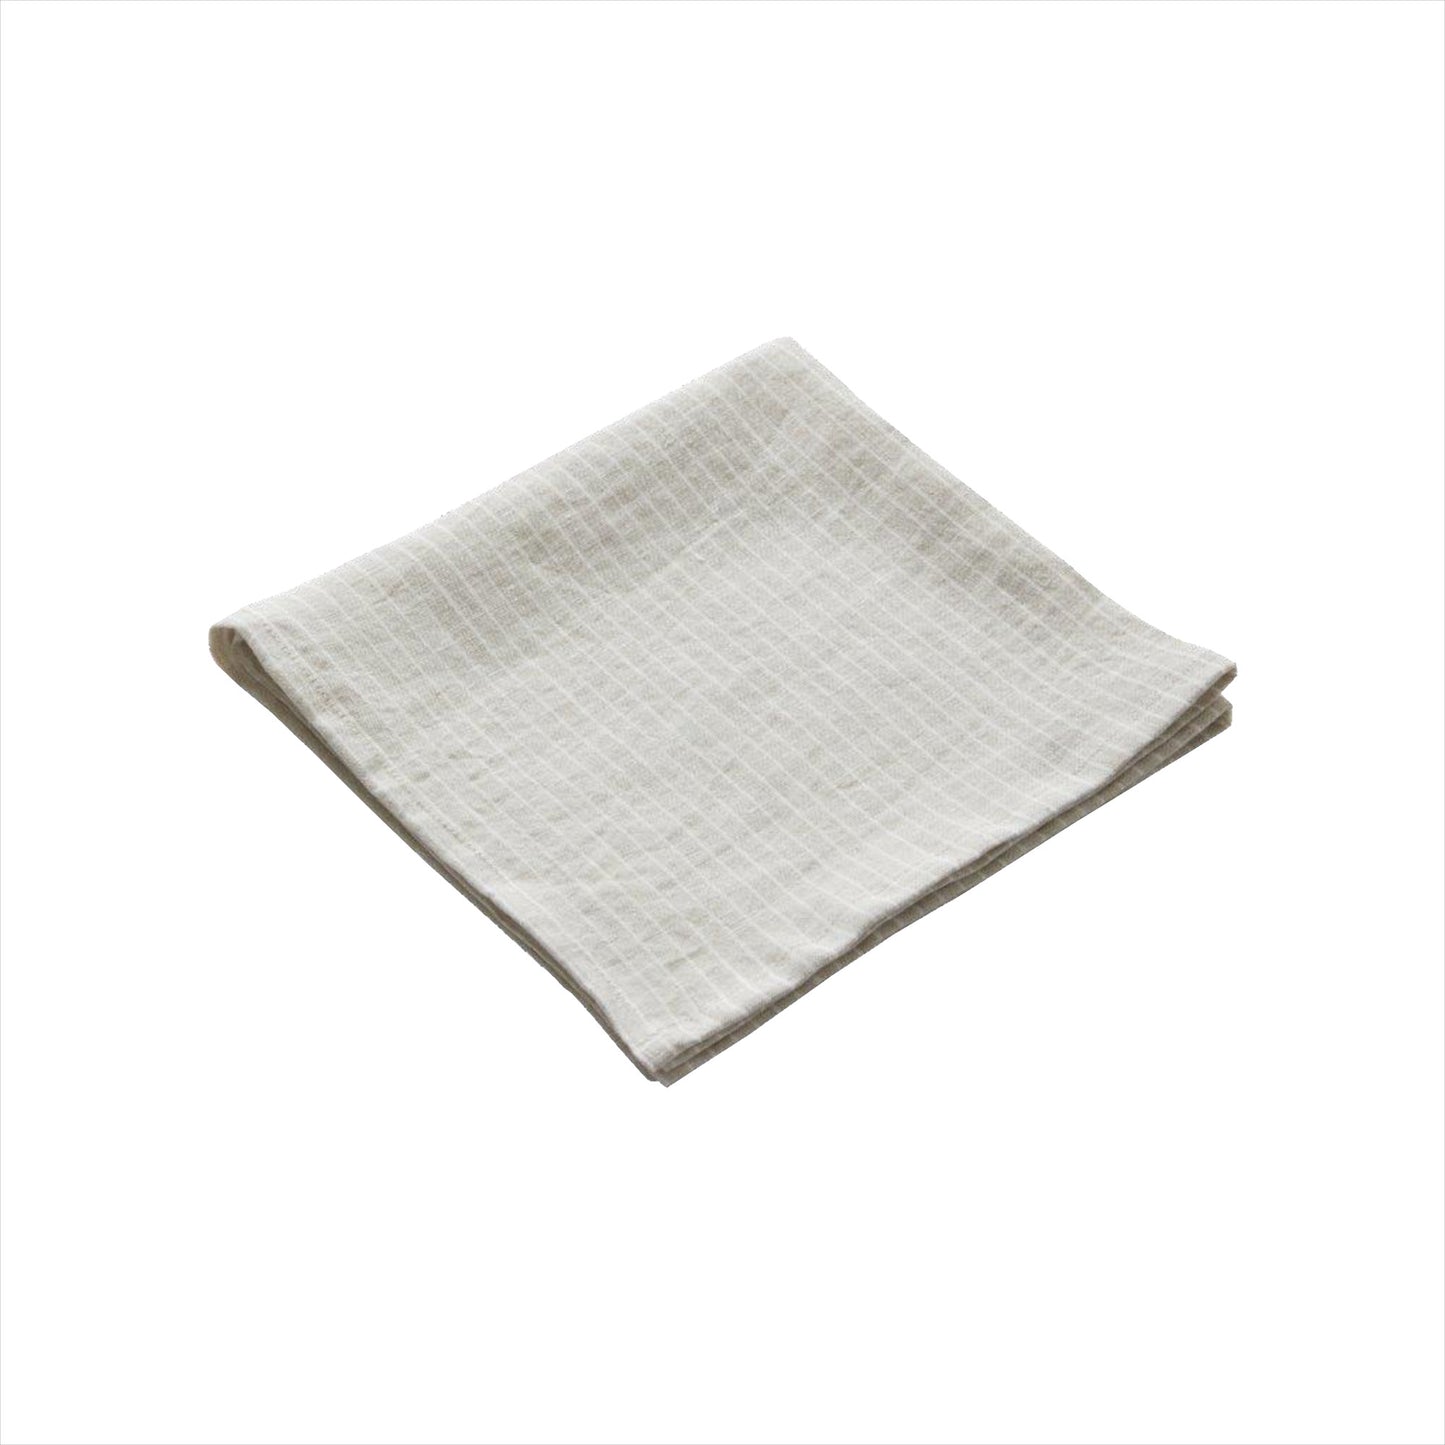 Set 6 serviettes en lin 100% européen lin naturel rayé blanc